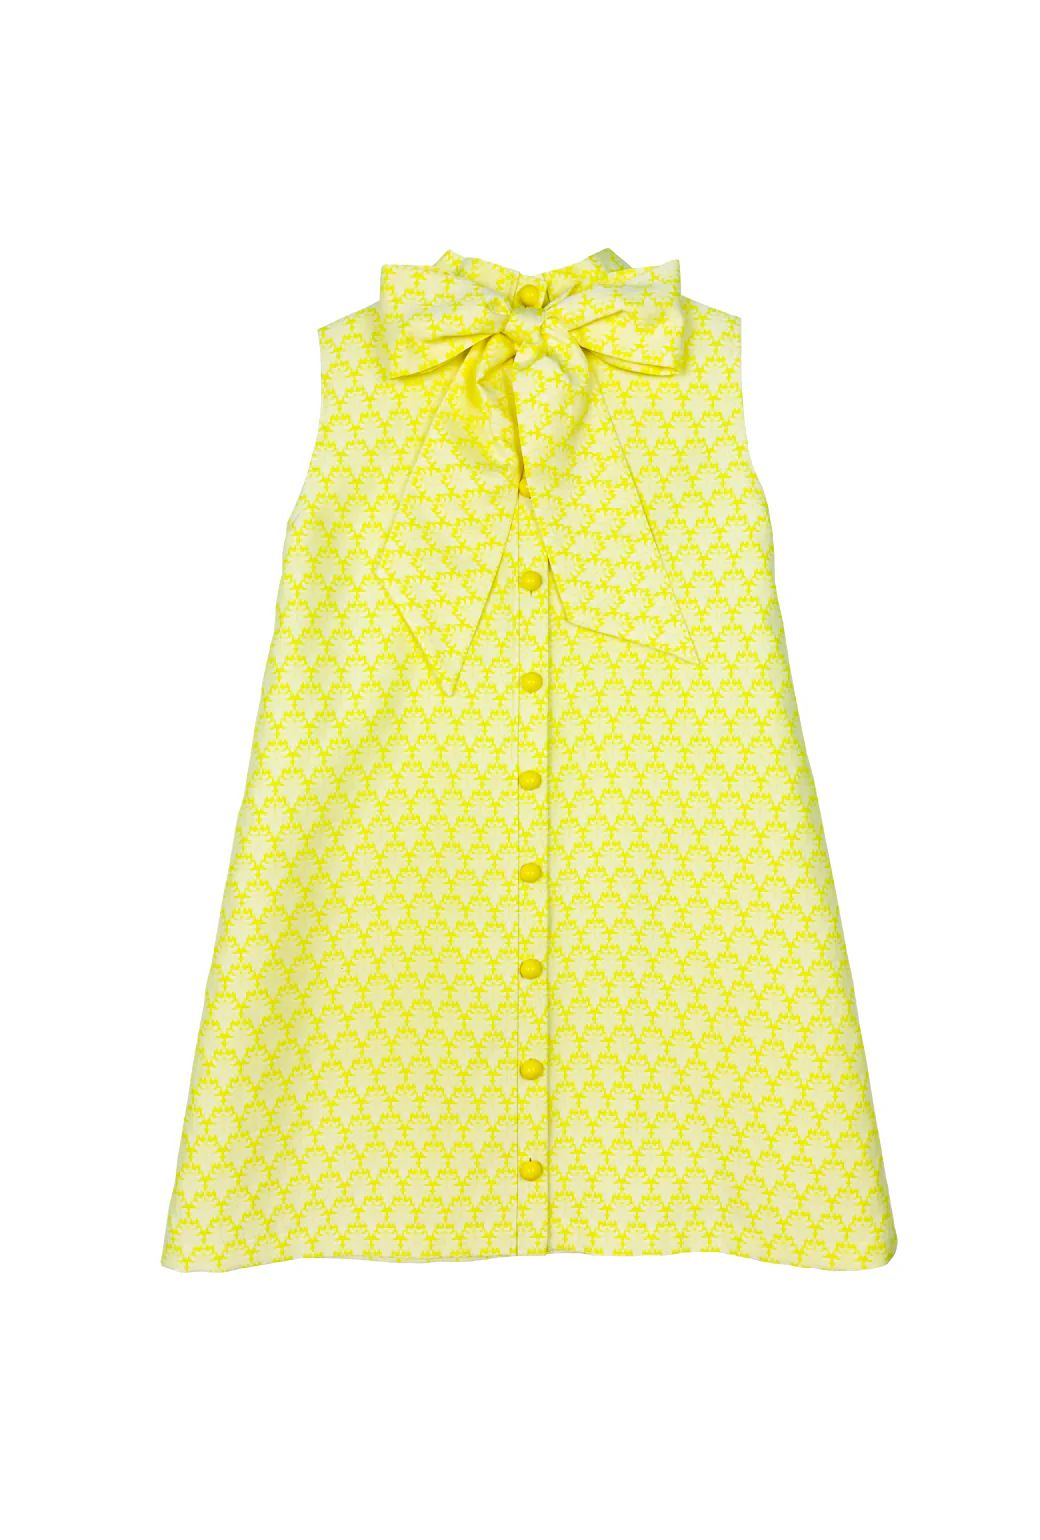 Buru x Kelly Golightly Bow Mod Dress - Citron Jacquard | Shop BURU